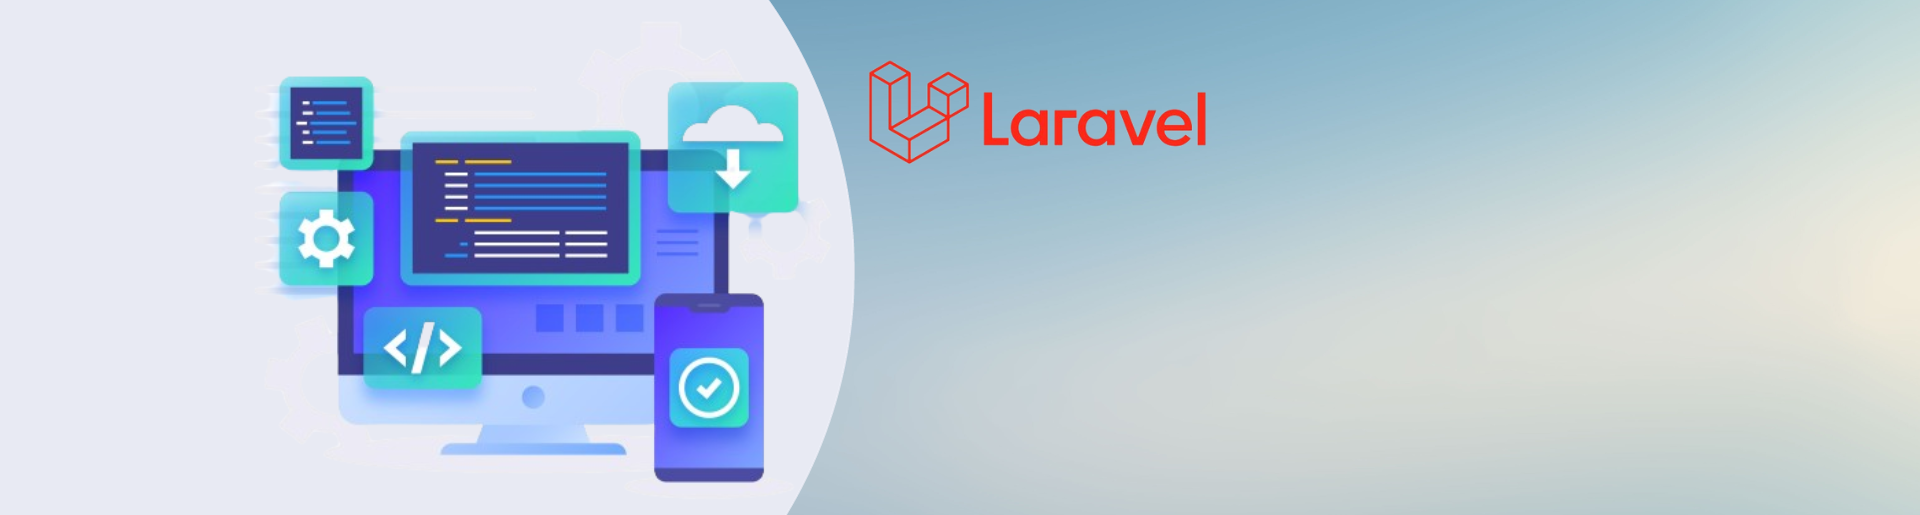 Hire Laravel Development Services - Maven Infotech